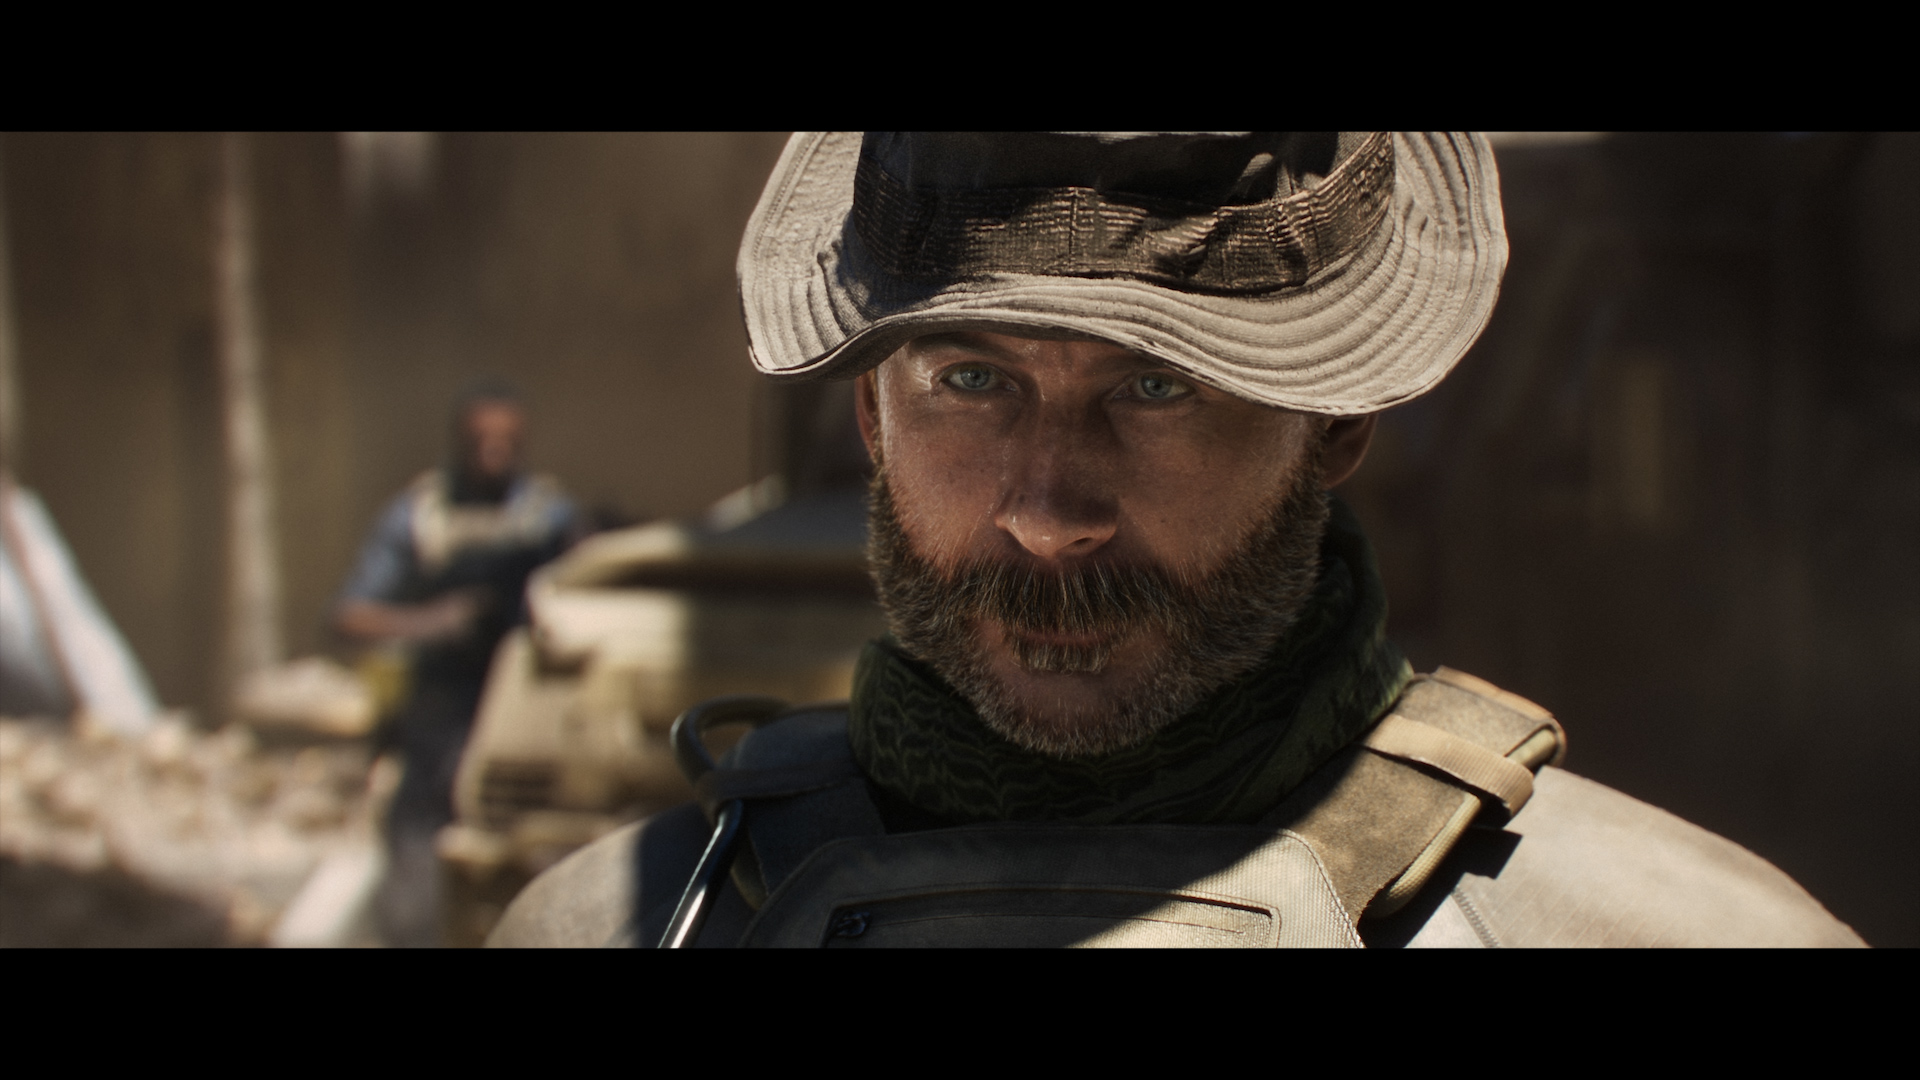 gnet | Call of Duty: Modern Warfare - Story Trailer